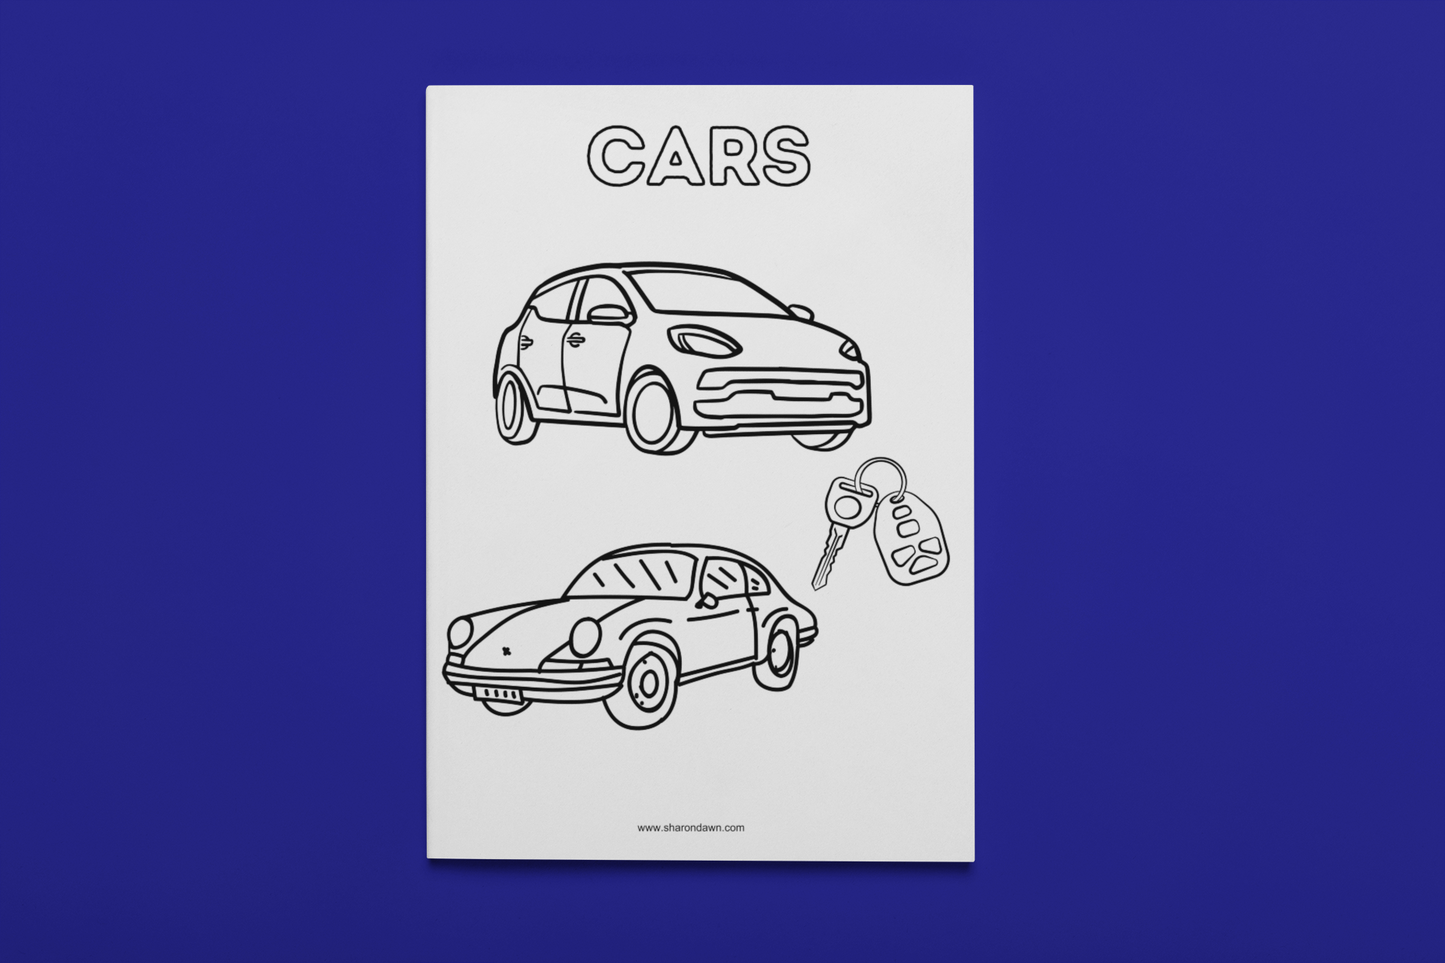 Cars - Colouring Sheet - Printable Digital Download ~ Sharon Dawn Collection